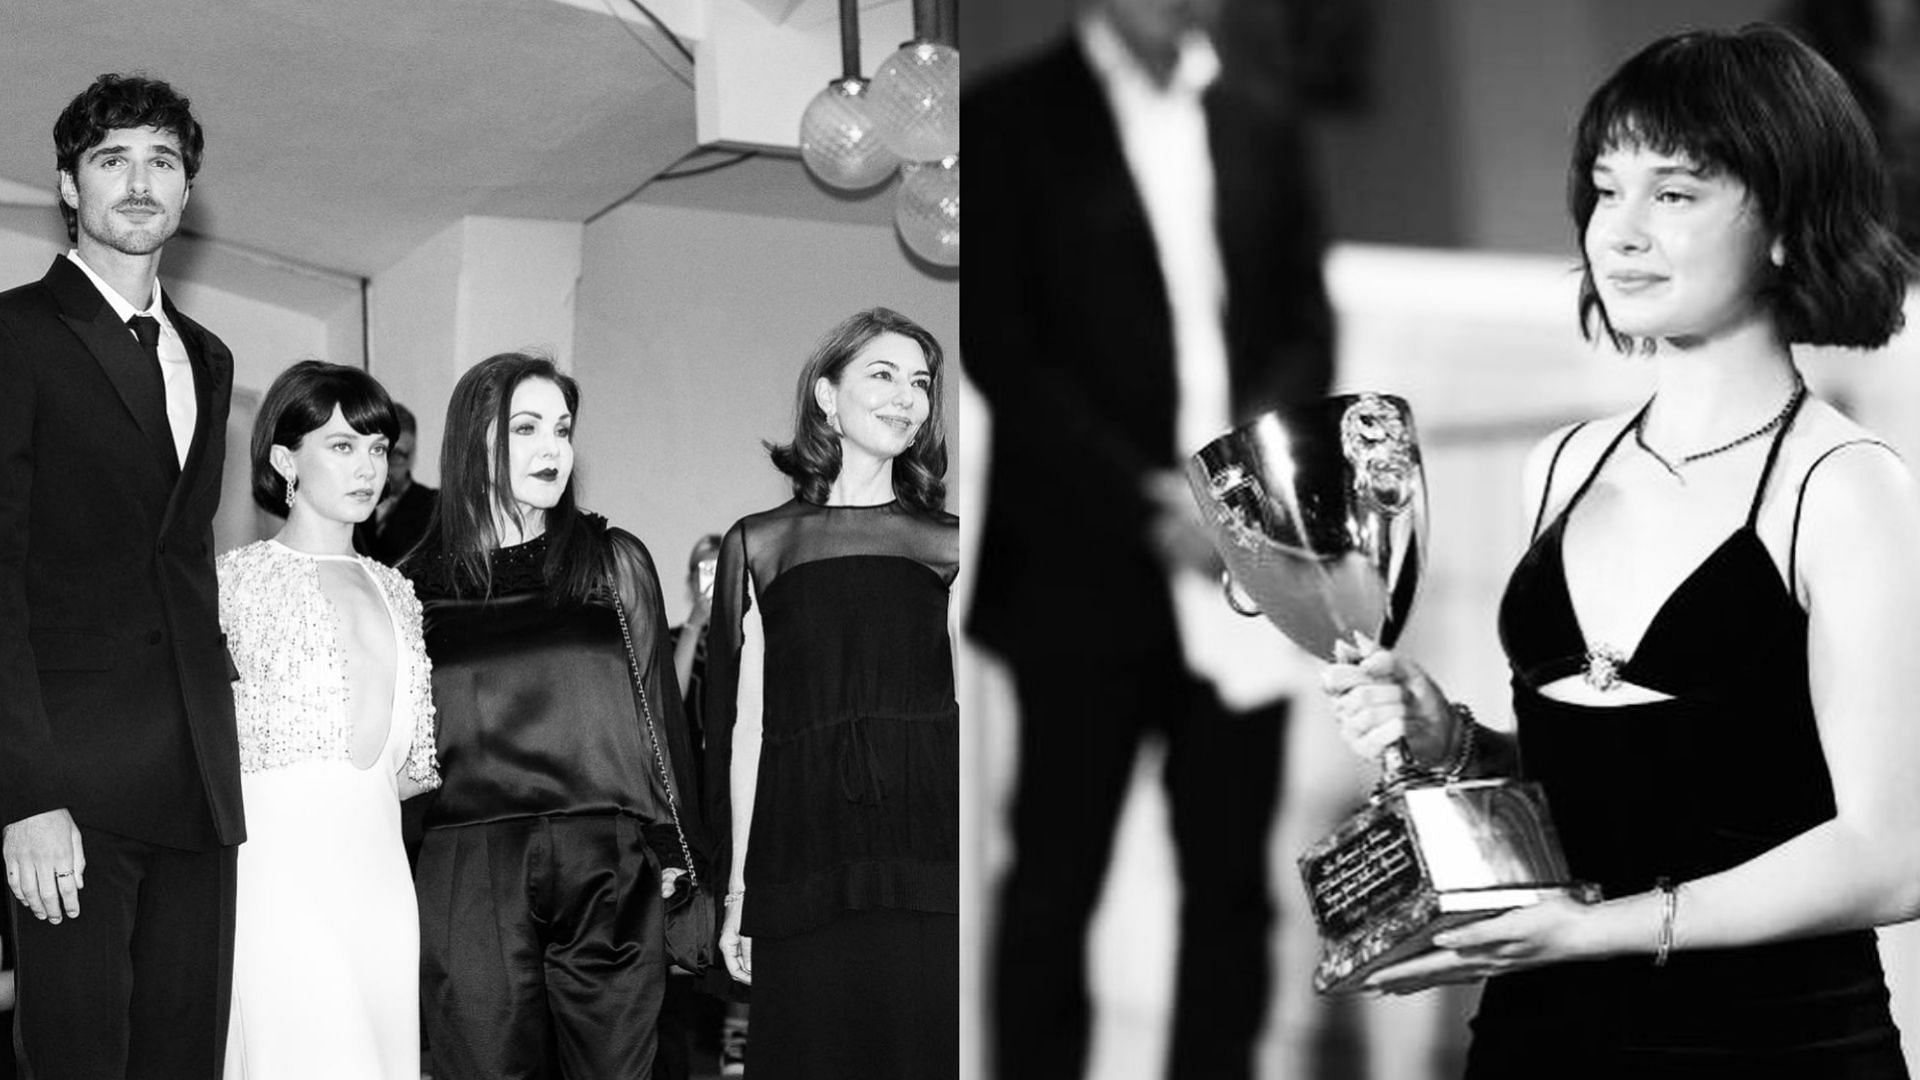 Spaeny won a Golden Globe nomination for &#039;Priscilla&#039; (Image via Instagram/@caileespaeny)